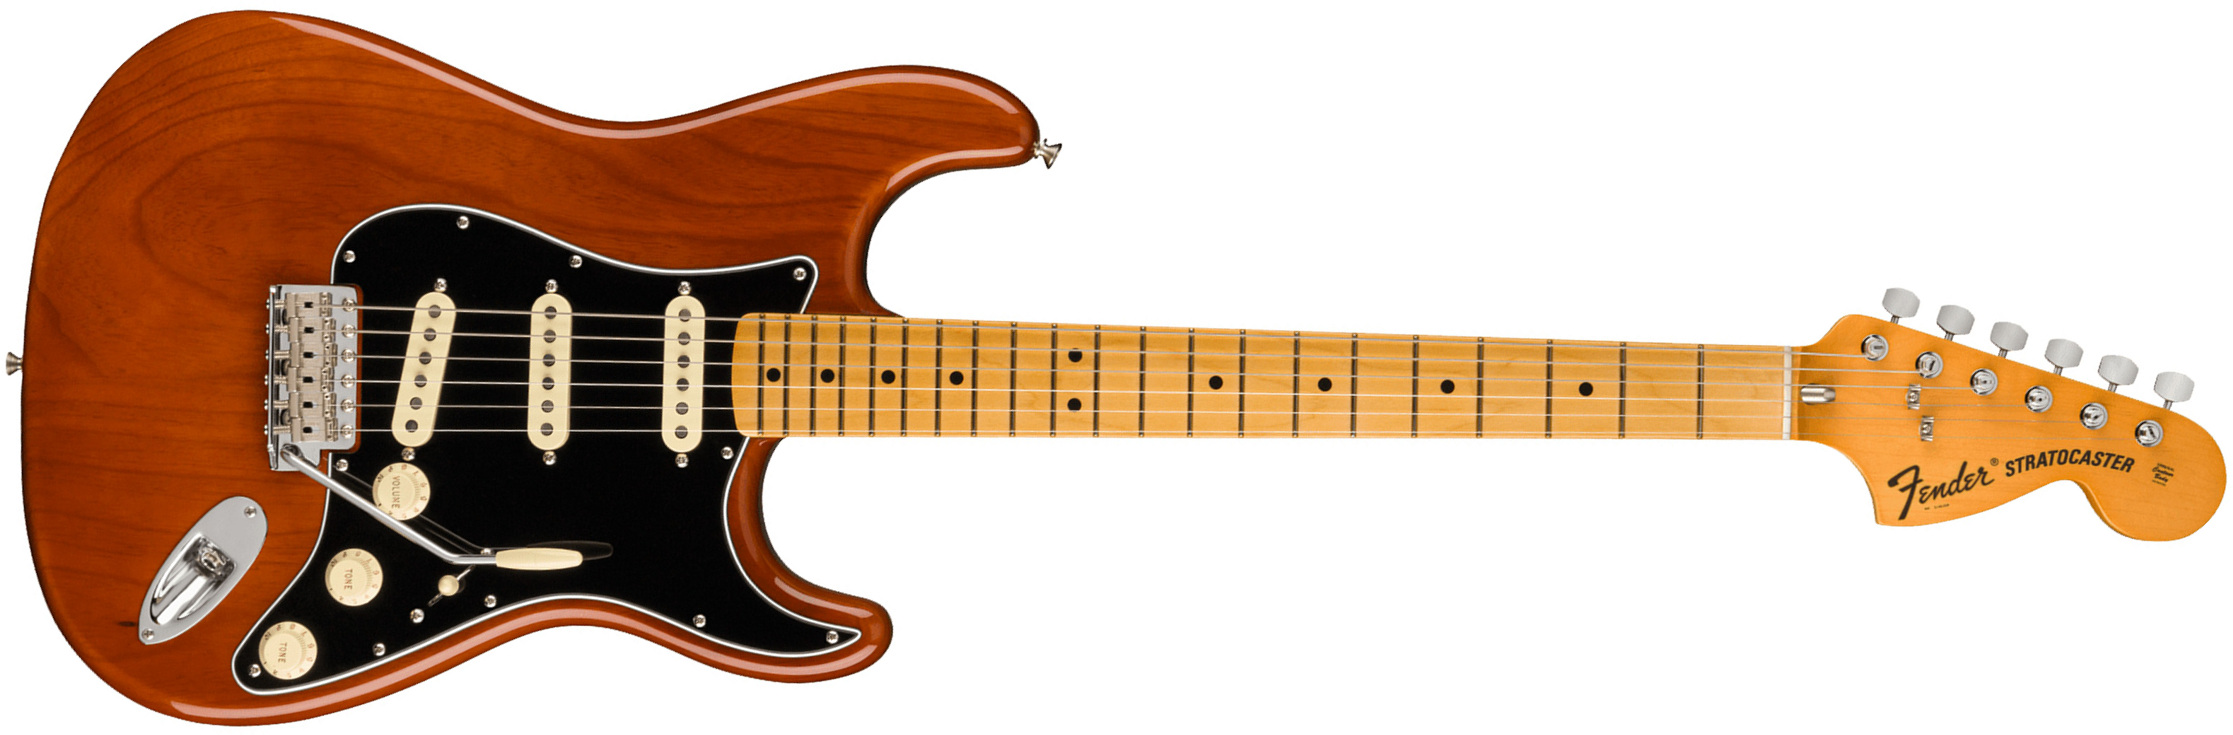 Fender Strat 1973 American Vintage Ii Usa 3s Trem Mn - Mocha - E-Gitarre in Str-Form - Main picture